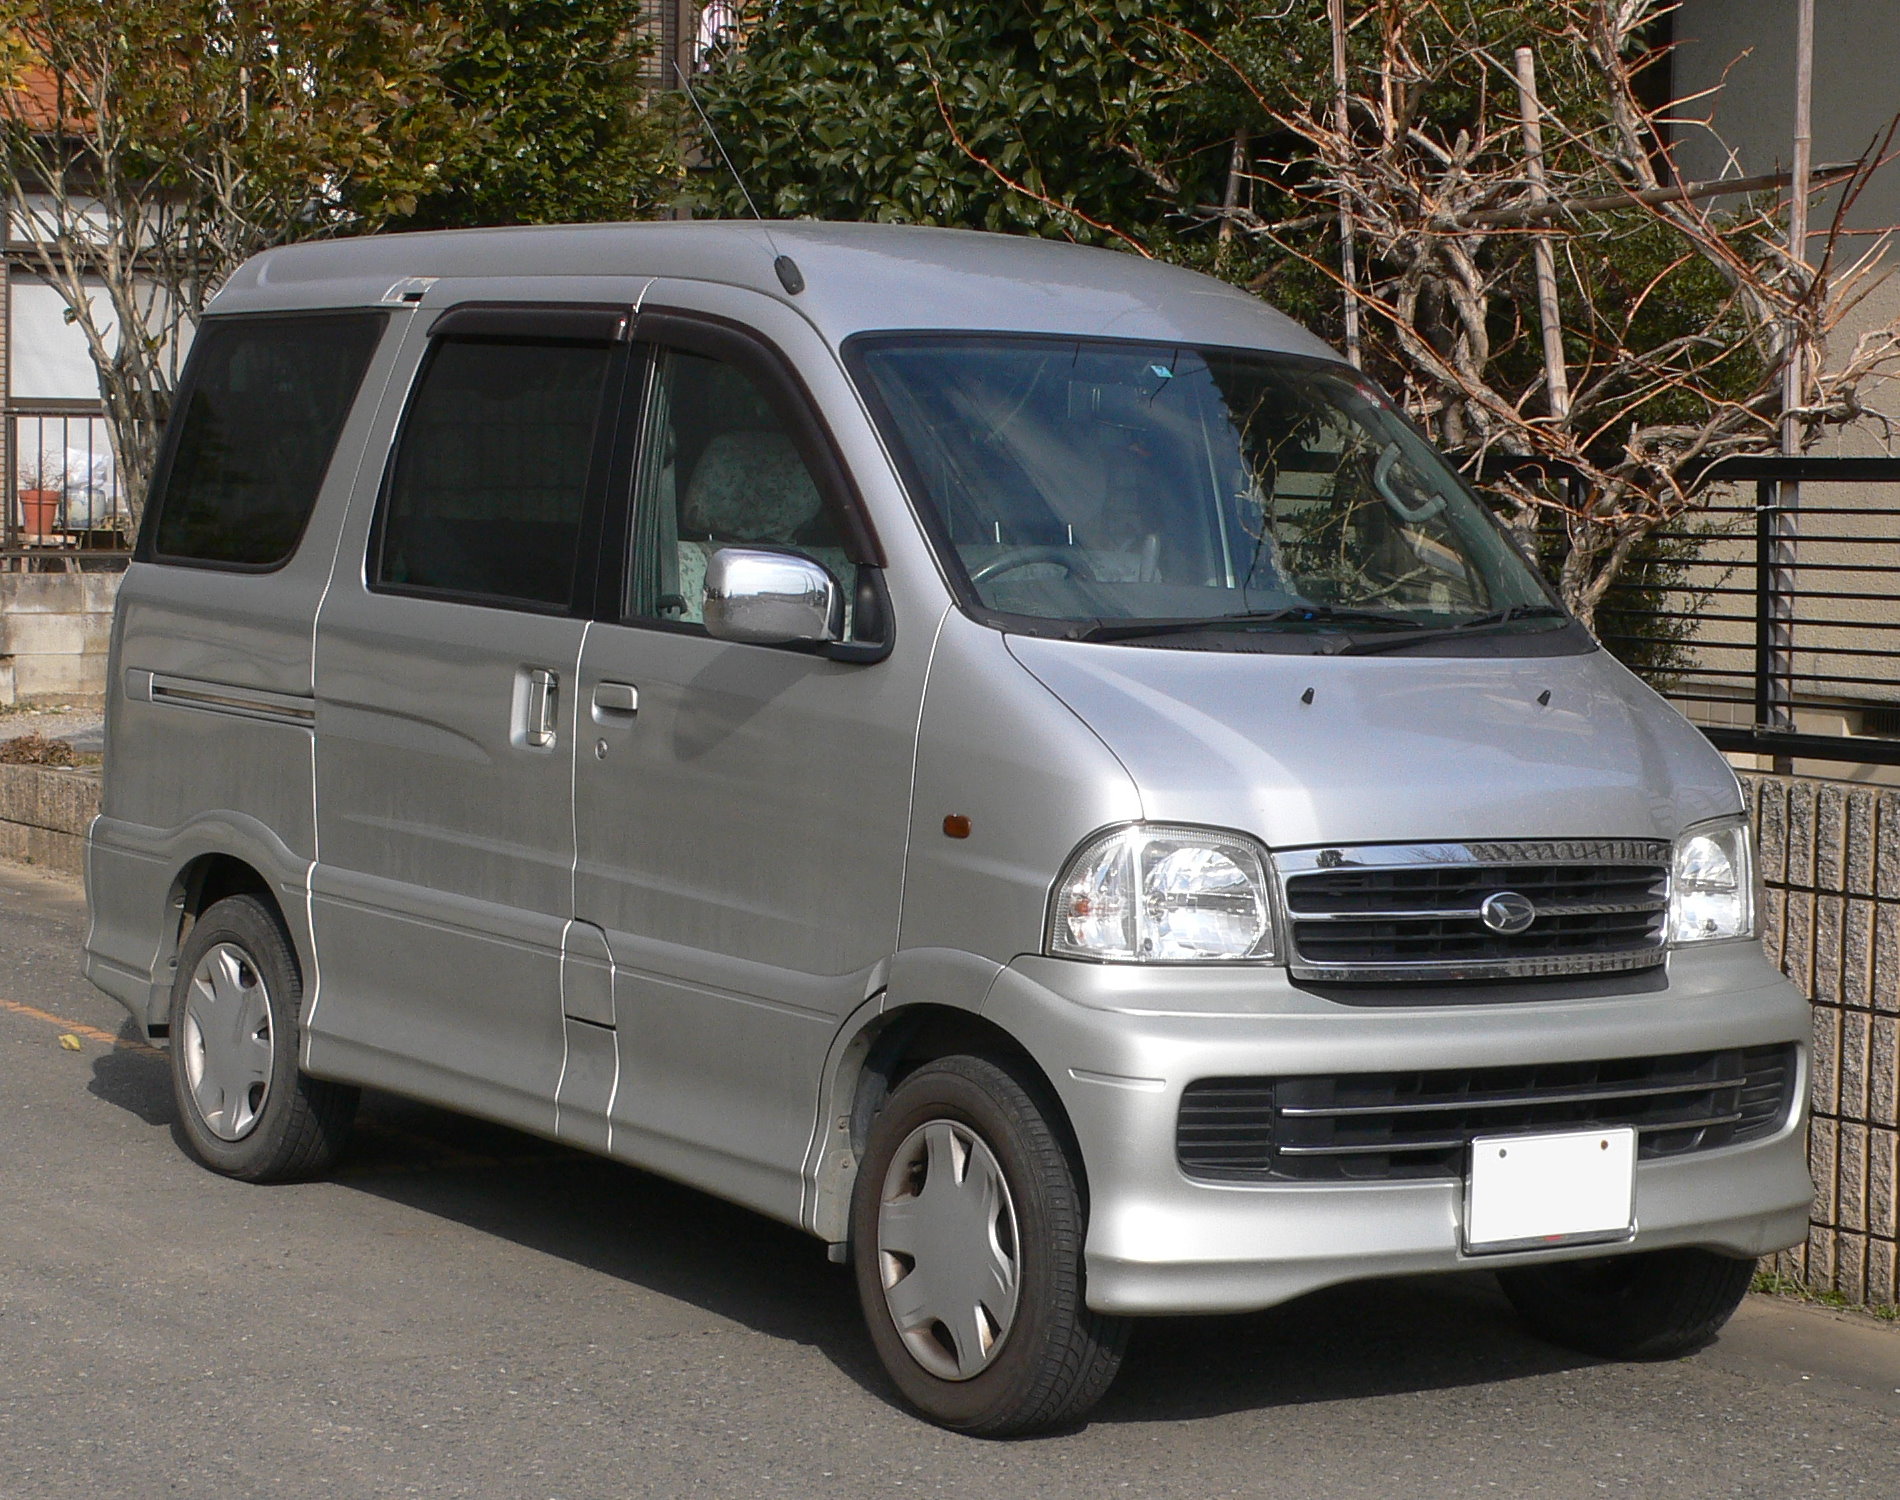 Dossier: 2000 Daihatsu Atrai7 01.jpg - Wikimedia Commons